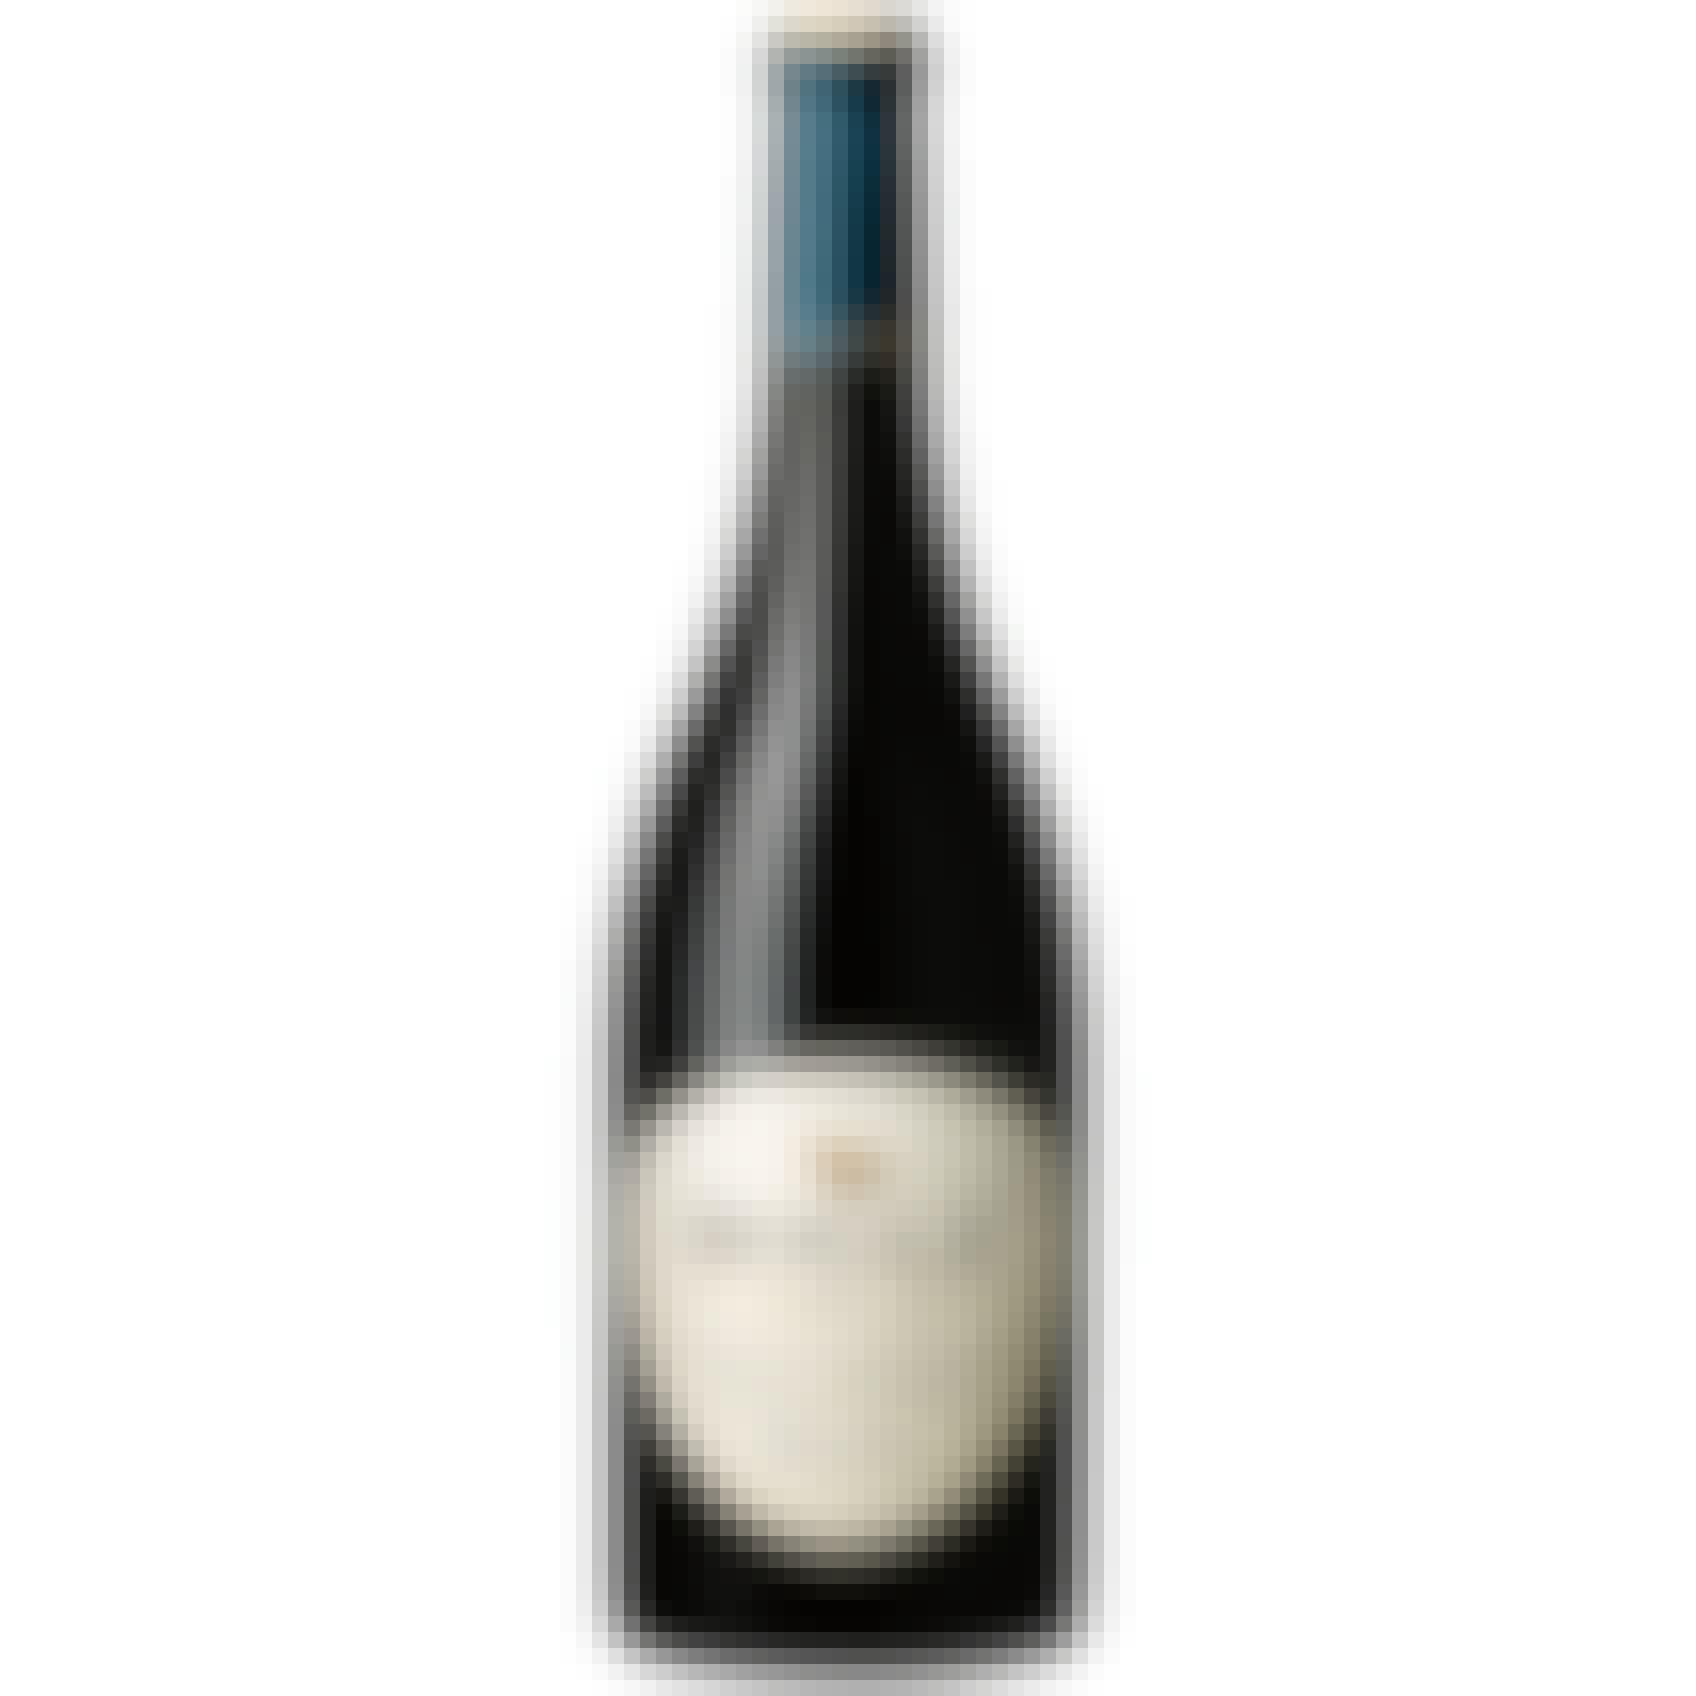 Bogle Pinot Noir 2021 750ml